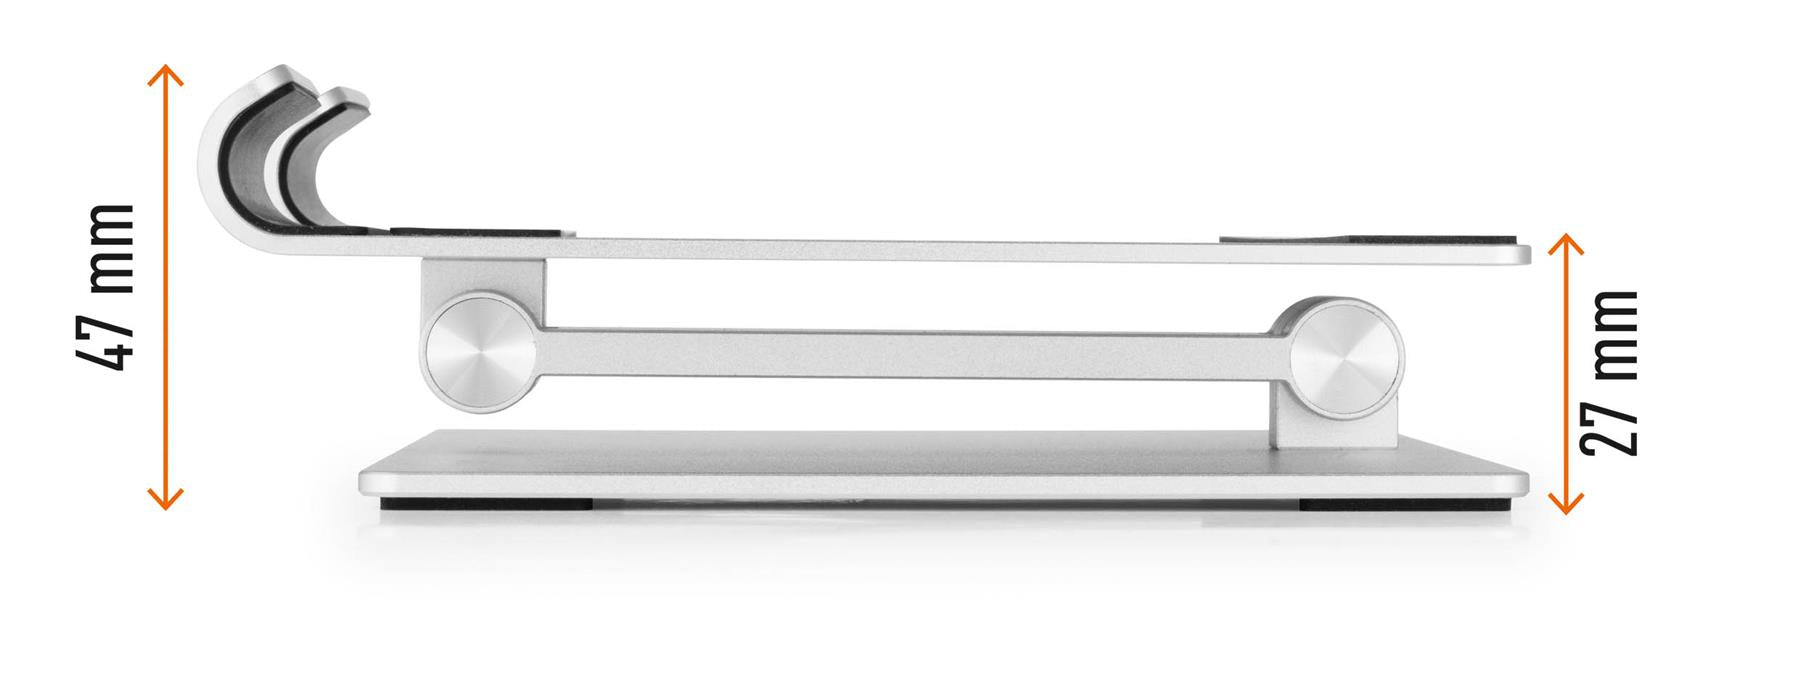 Durable Premium Aluminium Tablet Holder Rise Desk Stand | Foldable